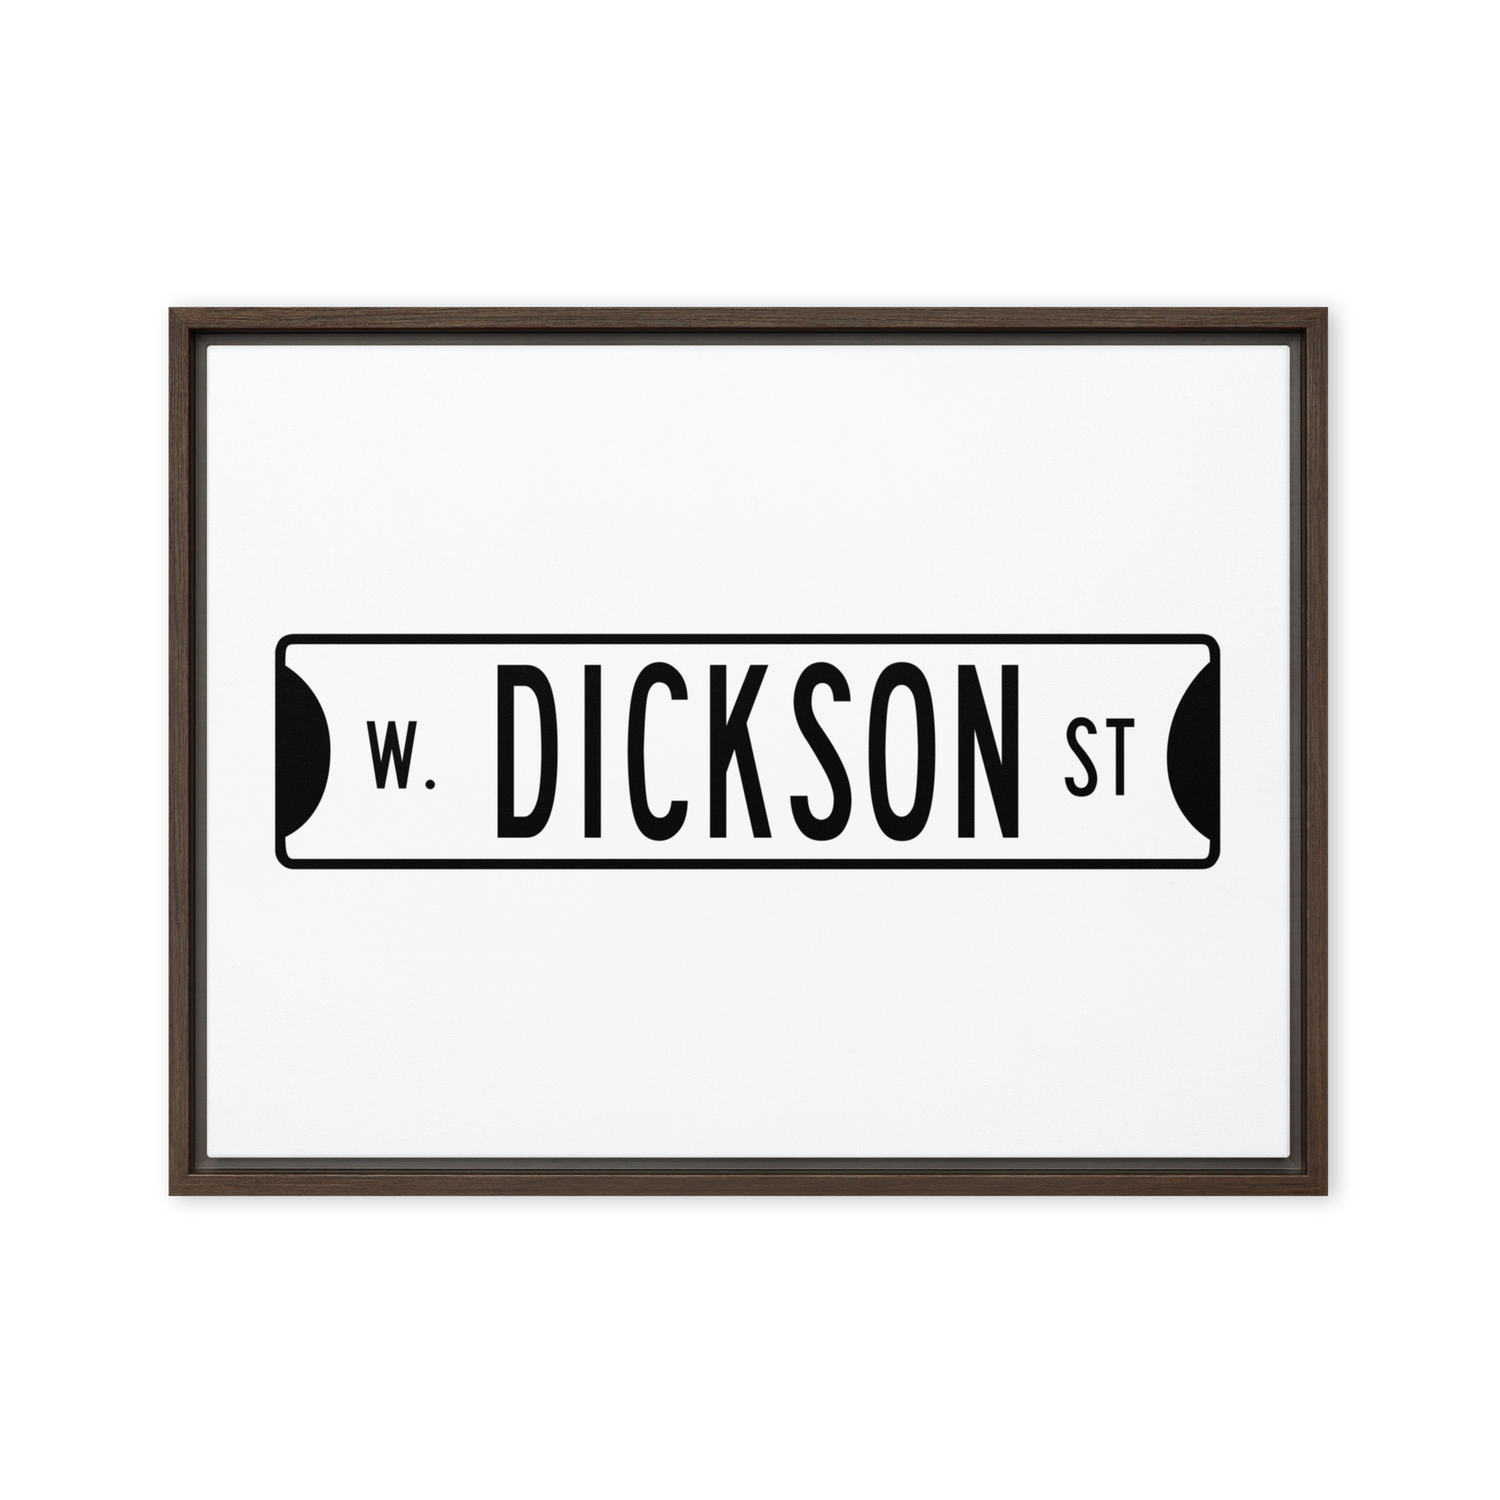 Retro Dickson Street Sign Framed canvas